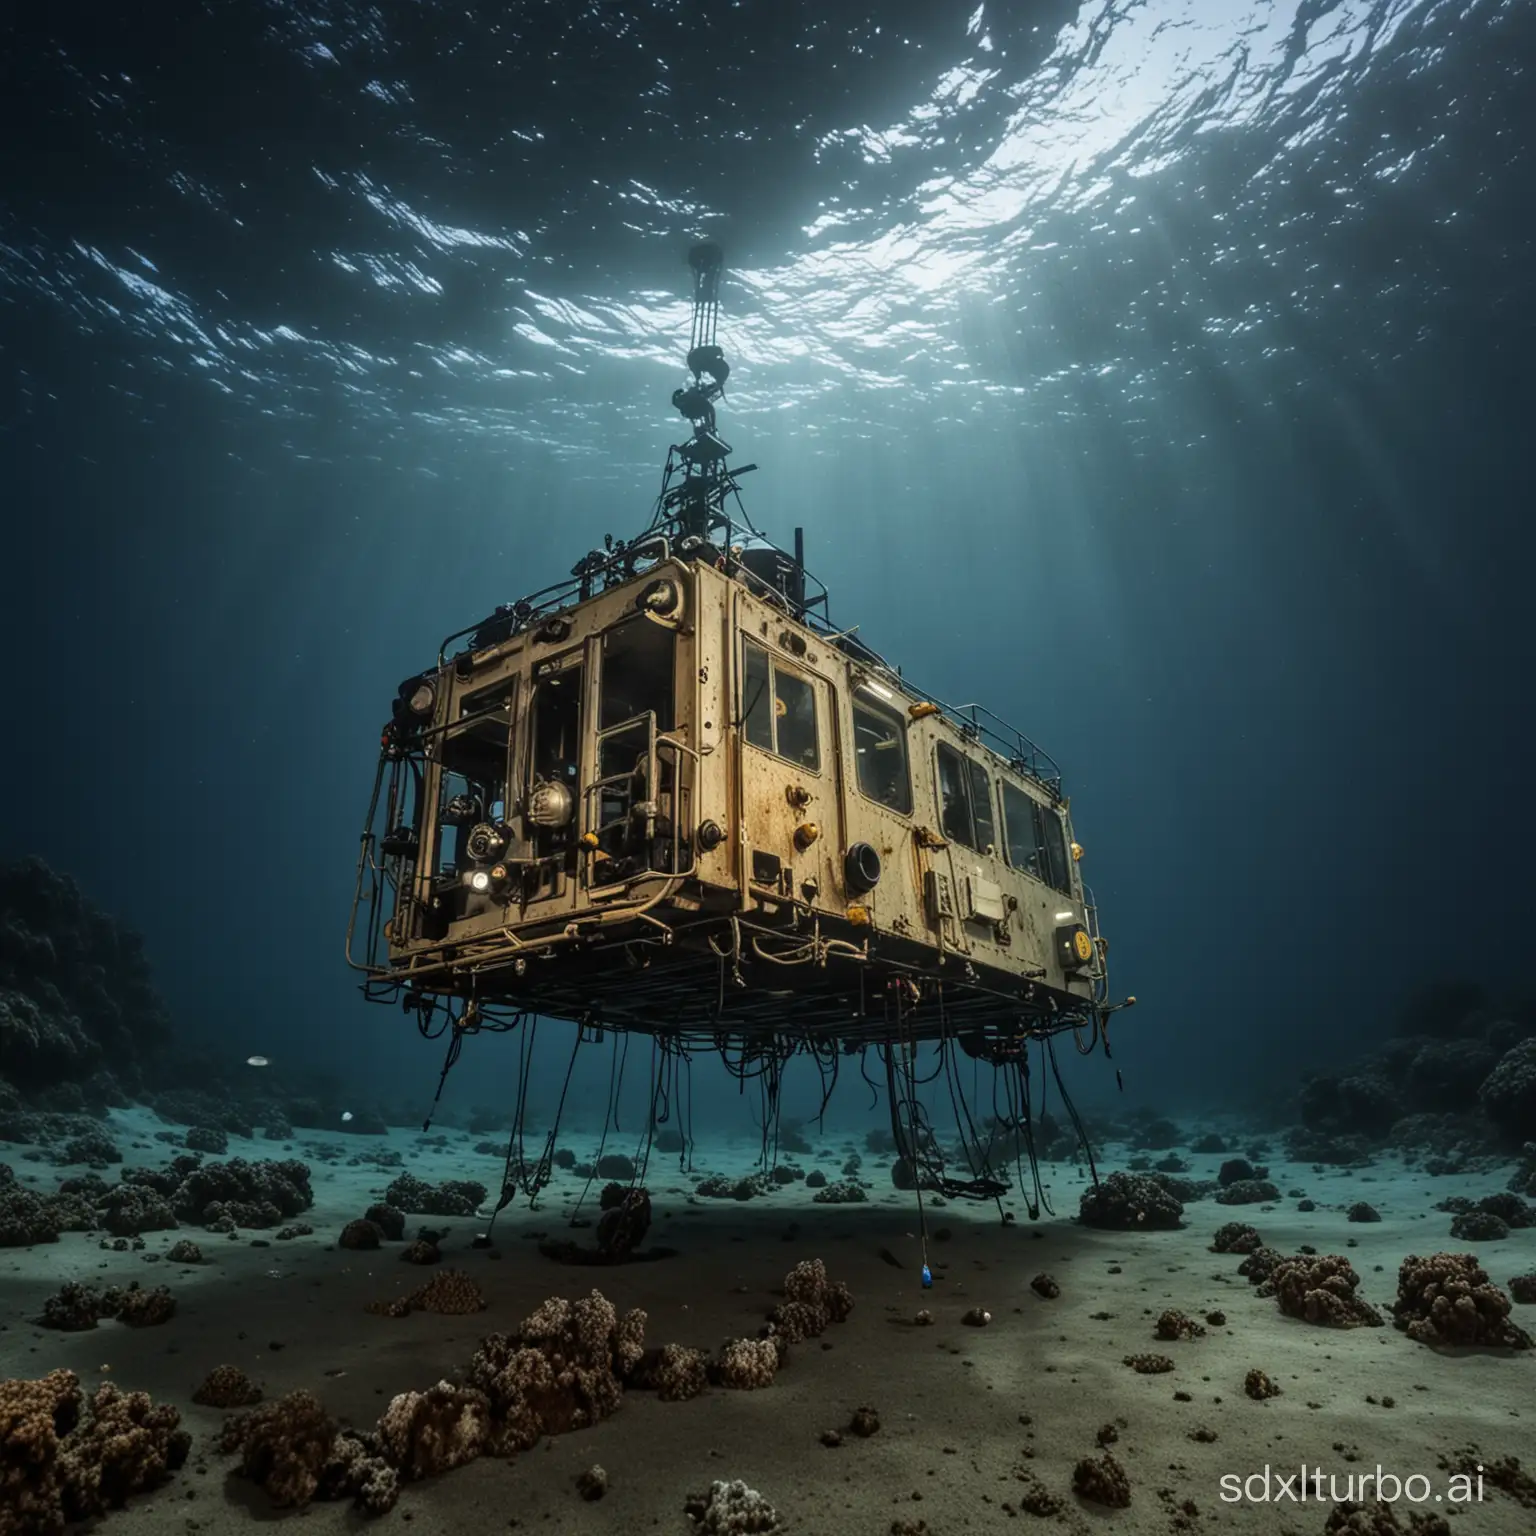 Exploring the deep sea with a sense of technology